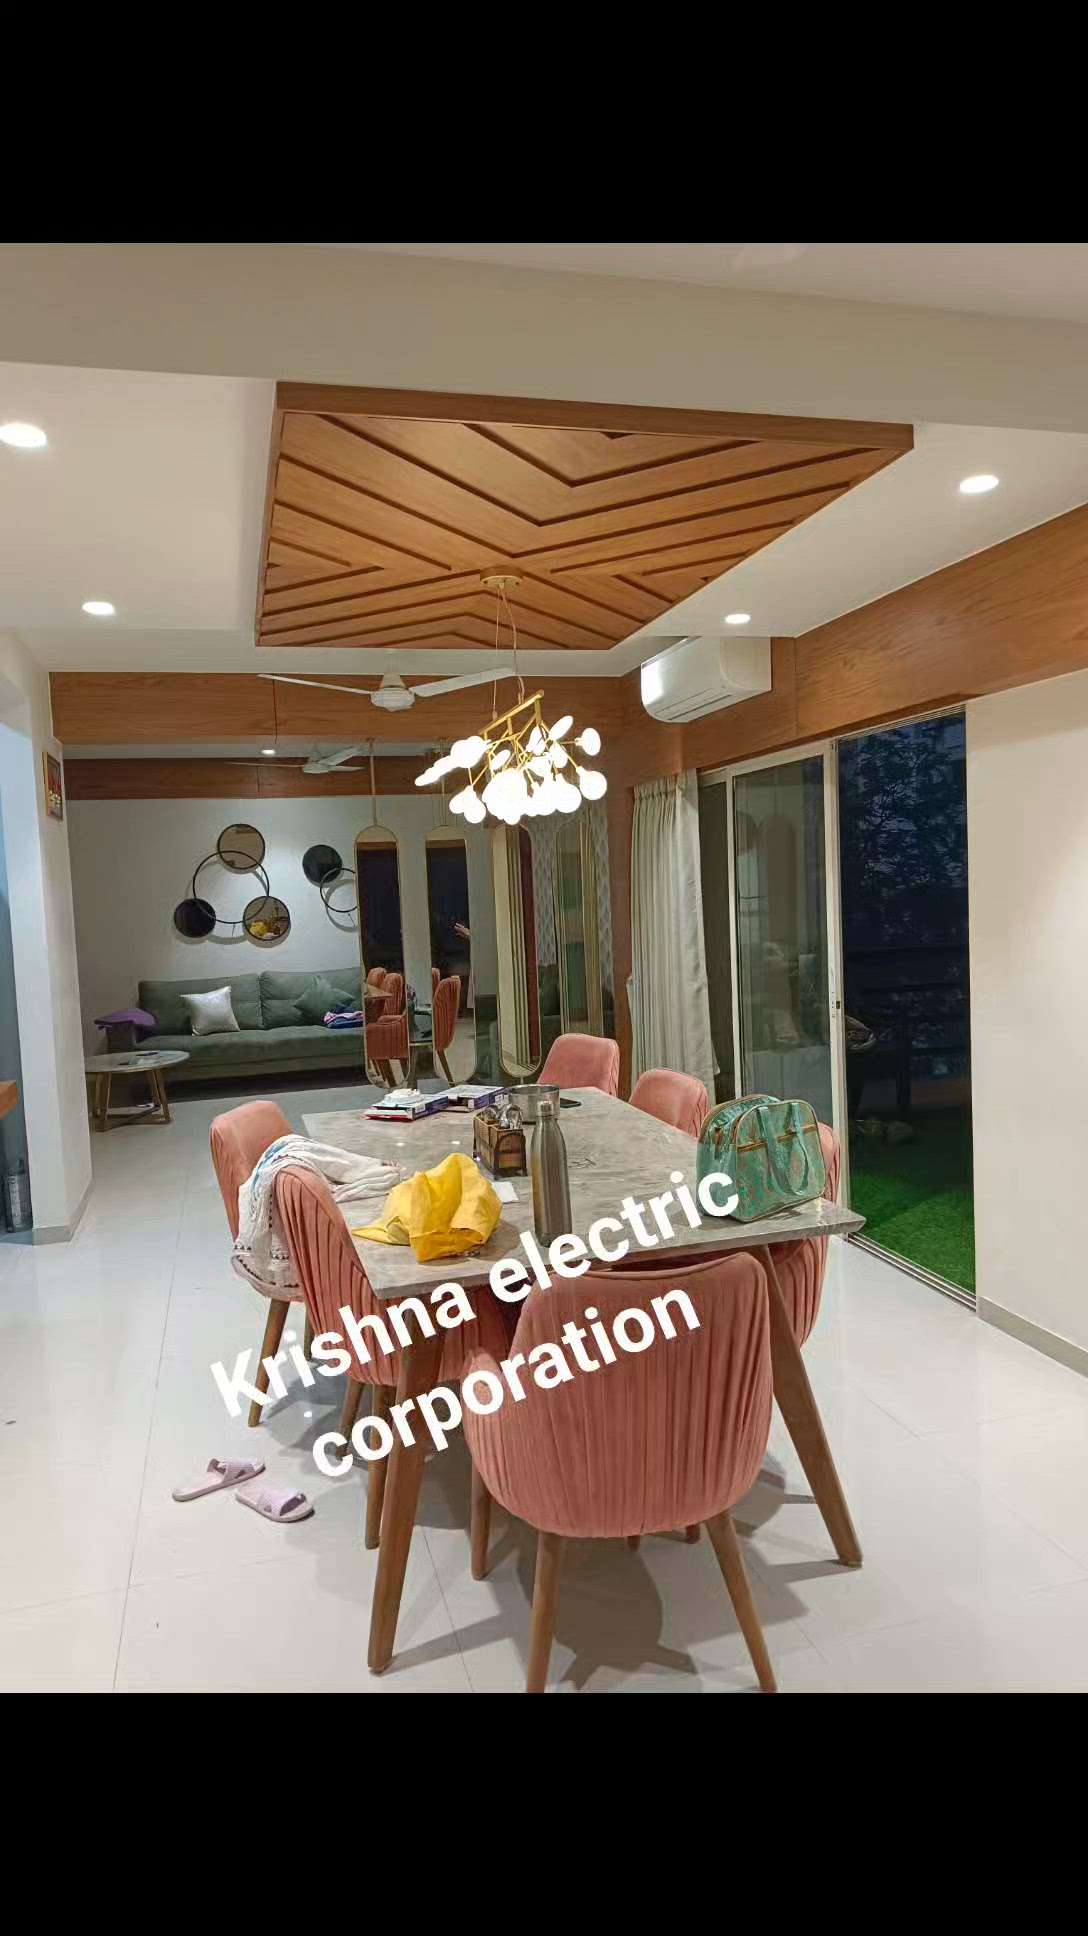 all electric work for interior design
Krishna electric corporation
7801867683  /  9979881125